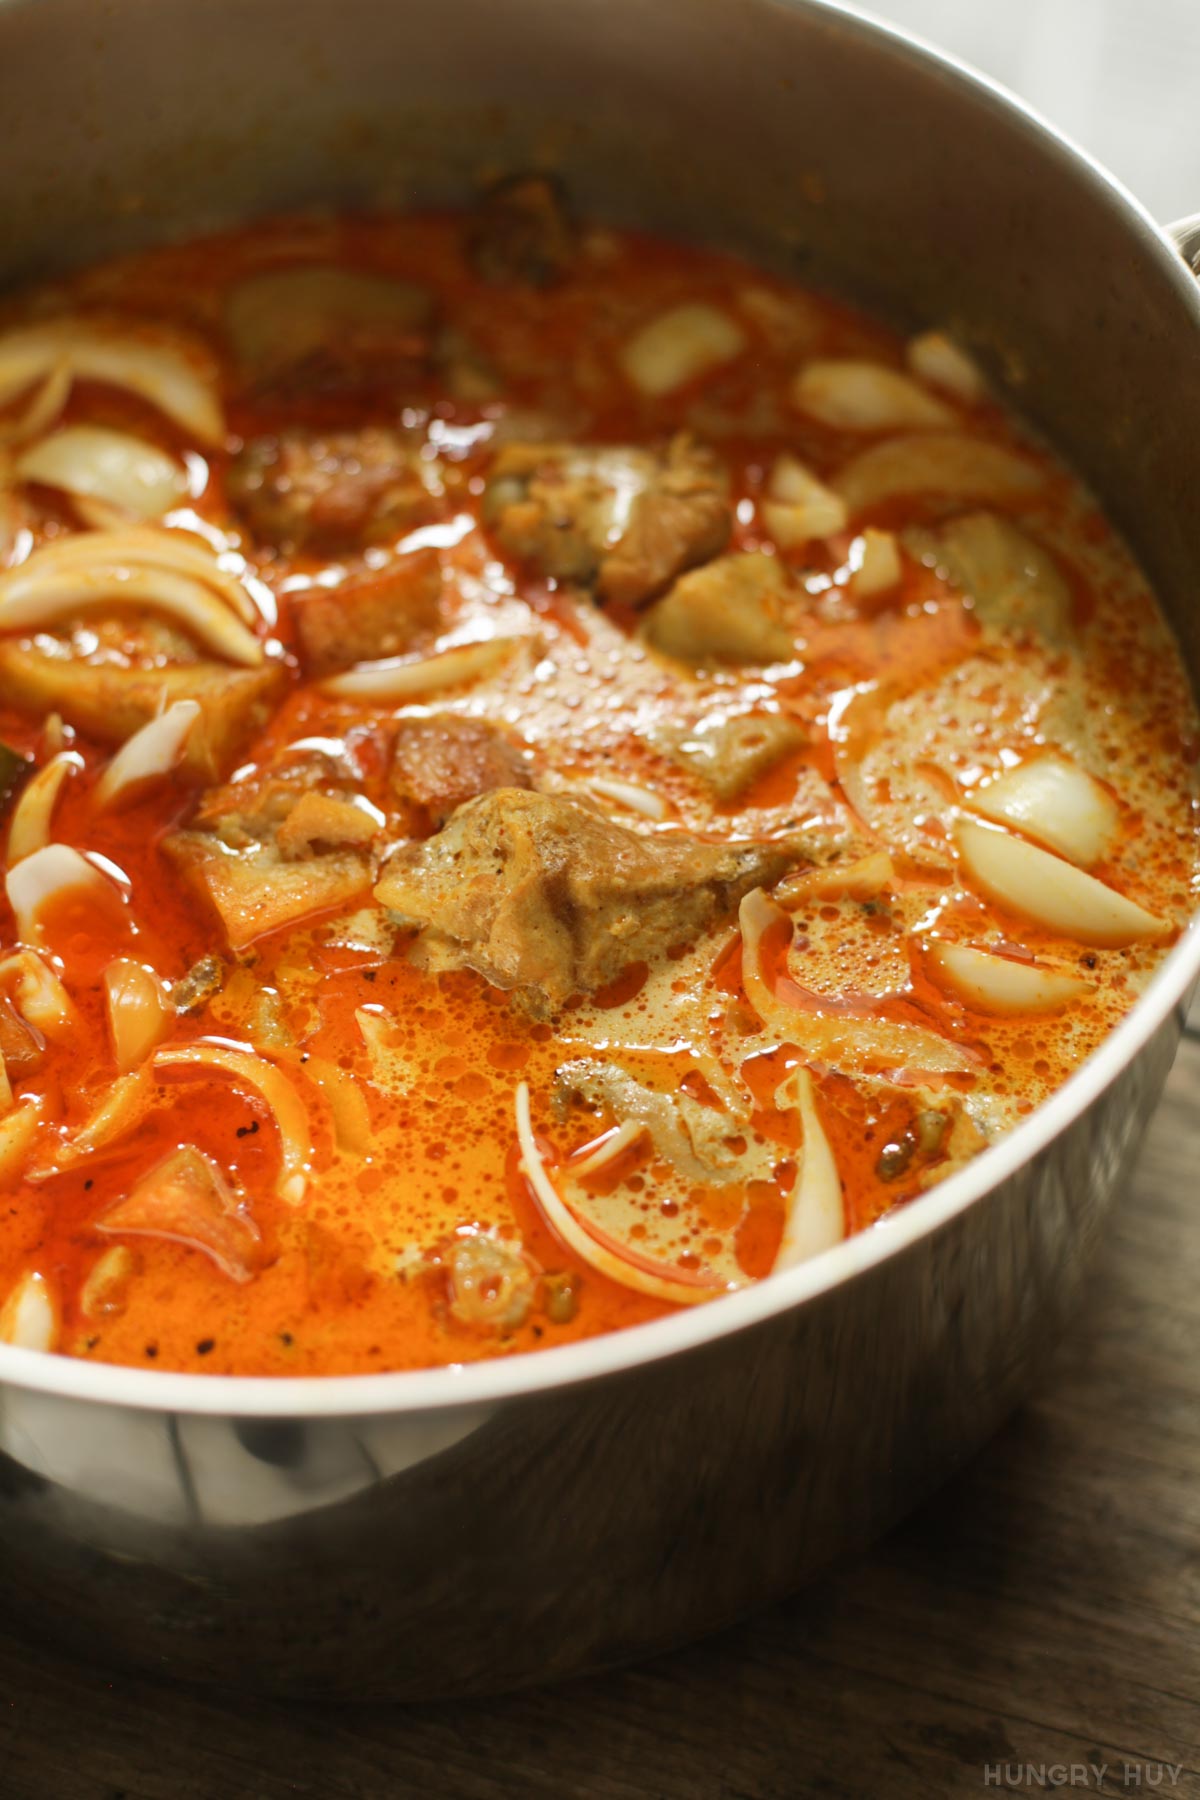 Big ol' pot of Vietnamese chicken curry